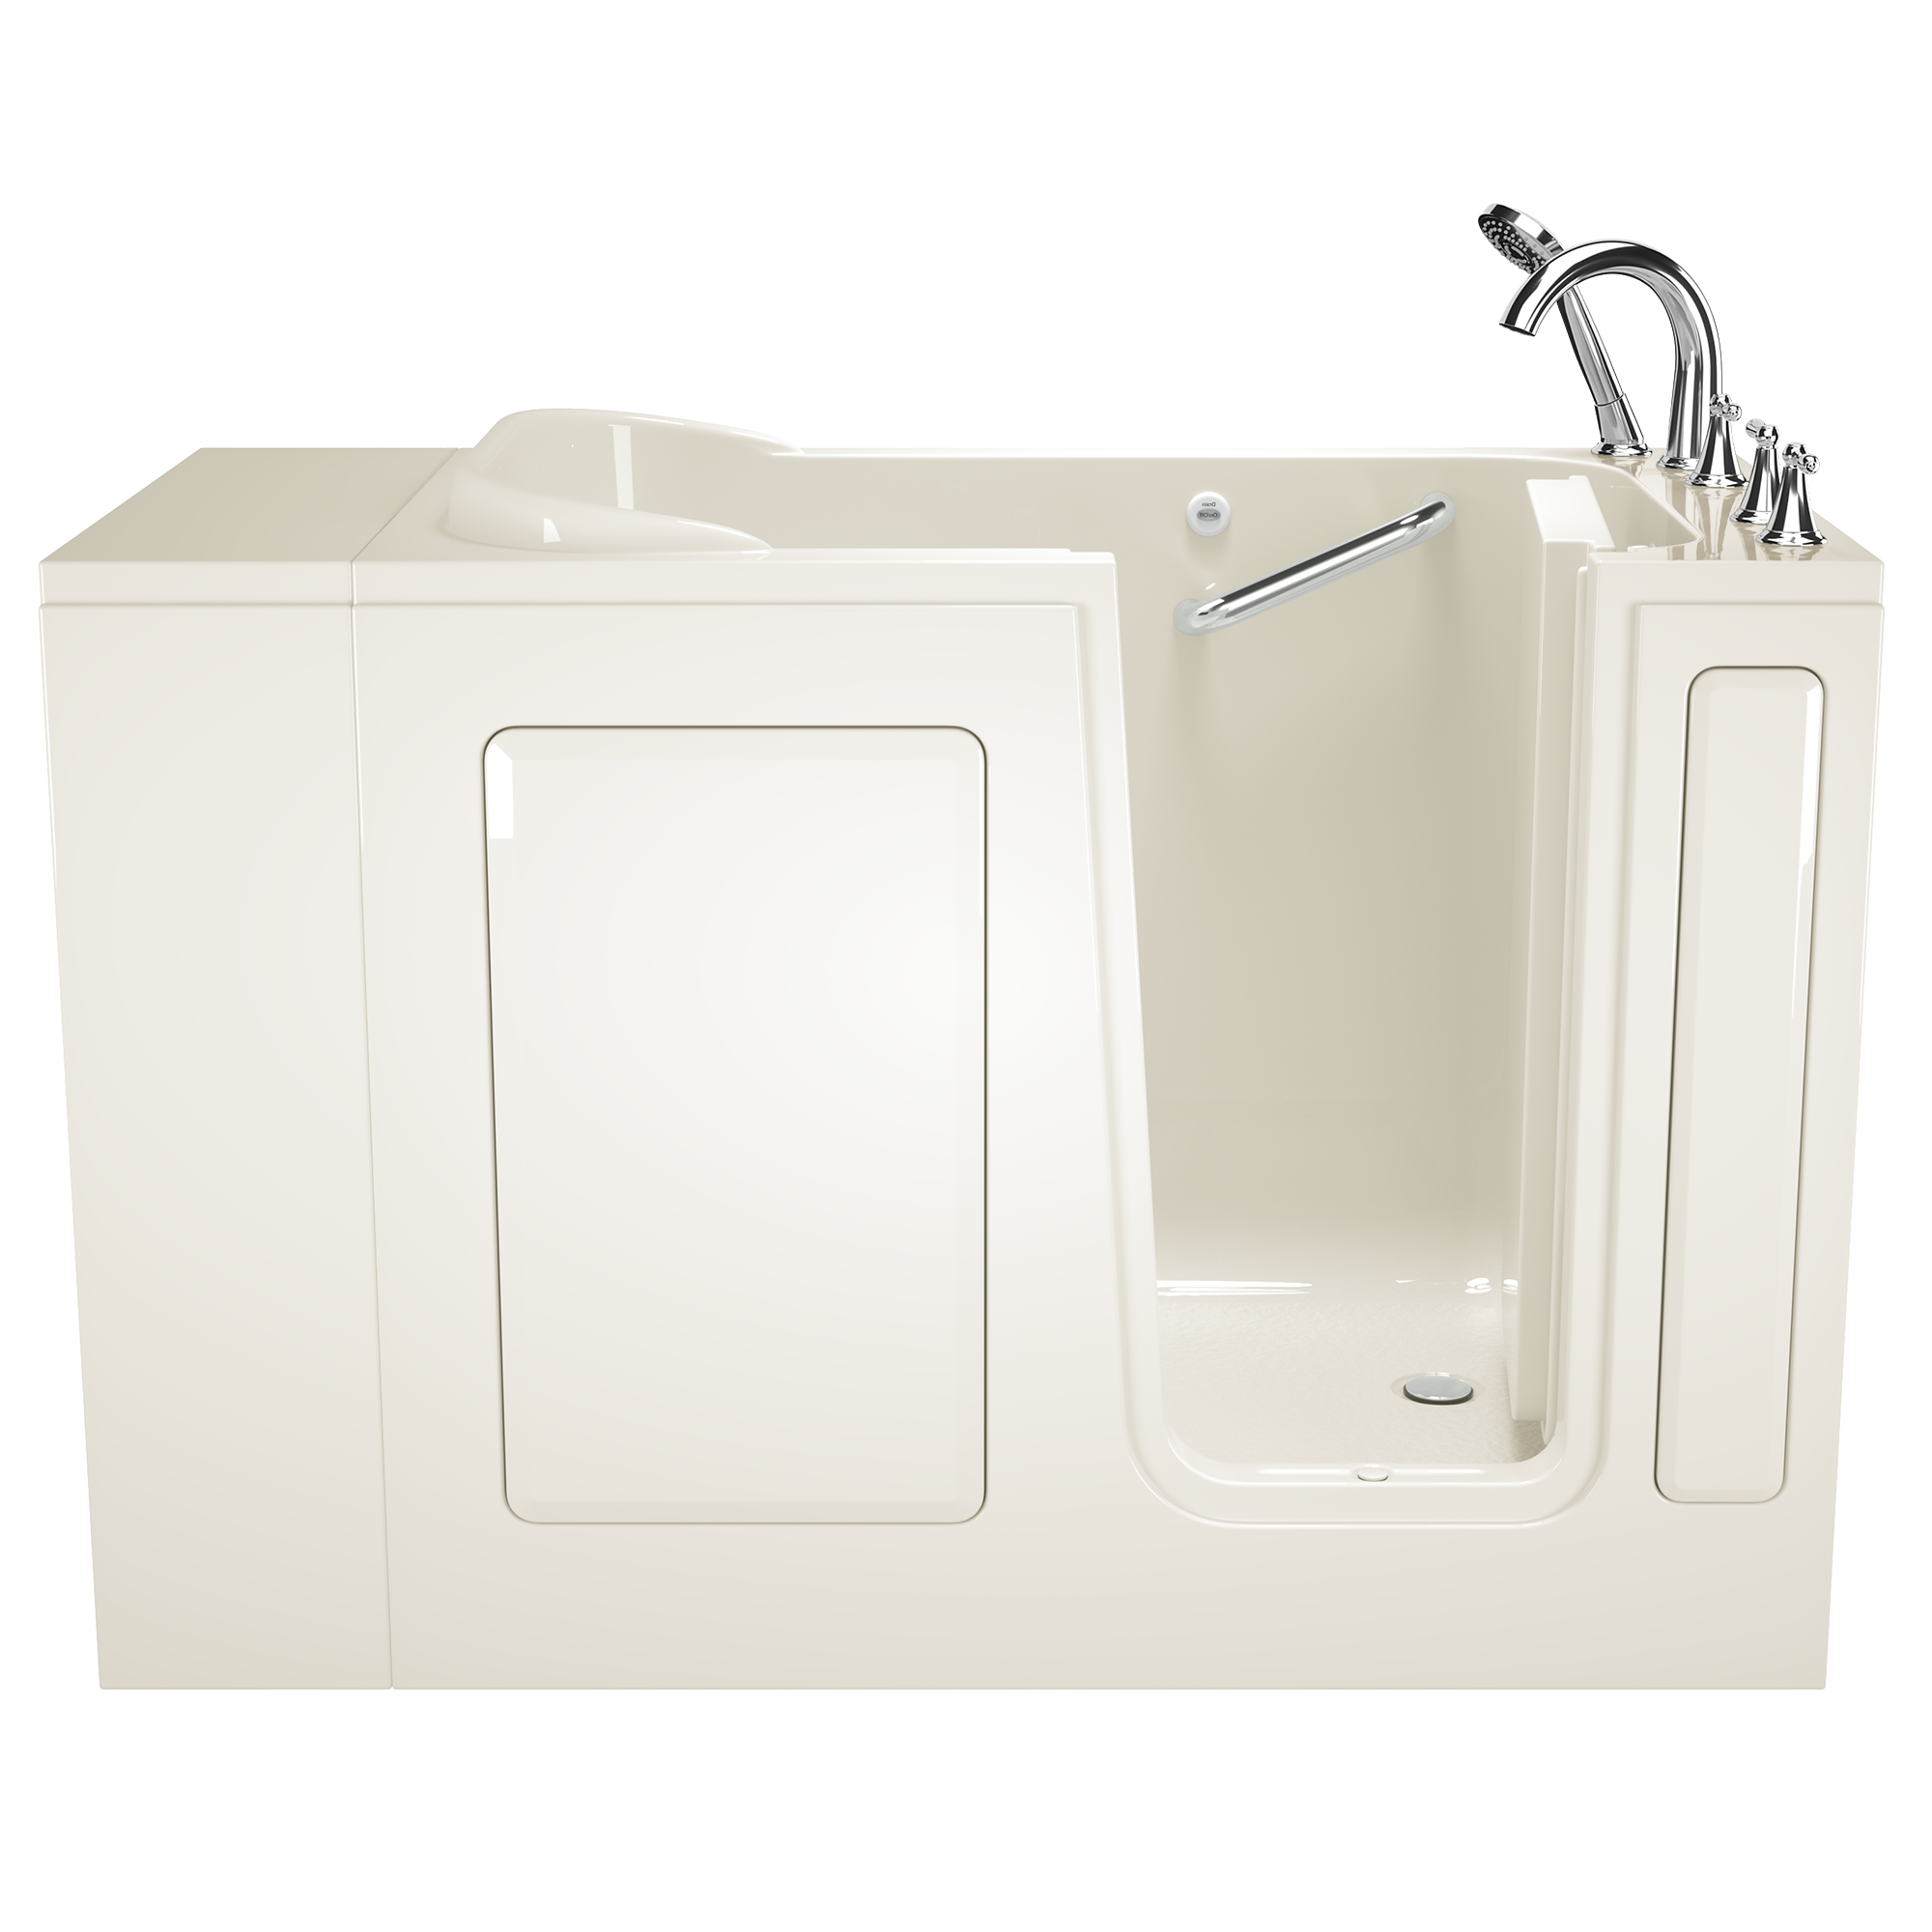 Gelcoat Value Series 28x48-inch Walk-in Soaking Bathtub  Right Hand Door and Drain